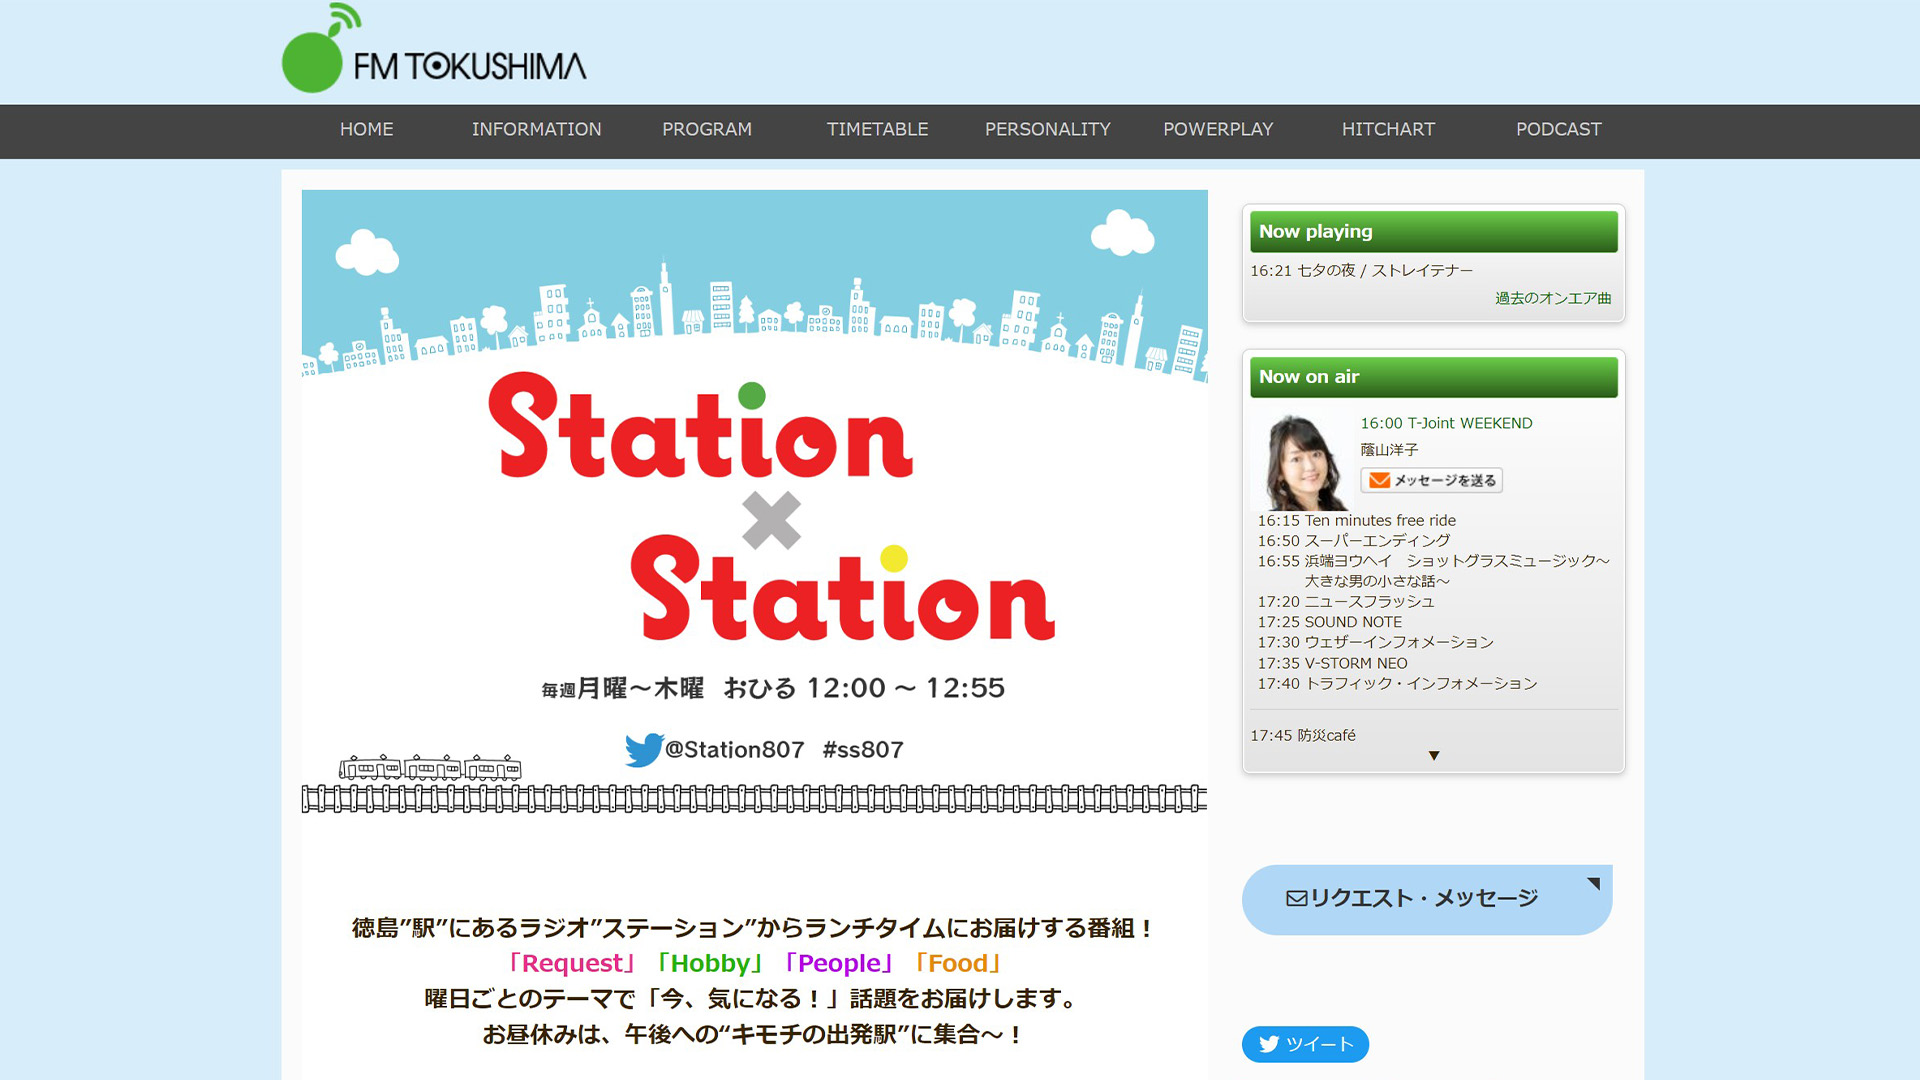 FM徳島「Station×Station!」で紹介されました！